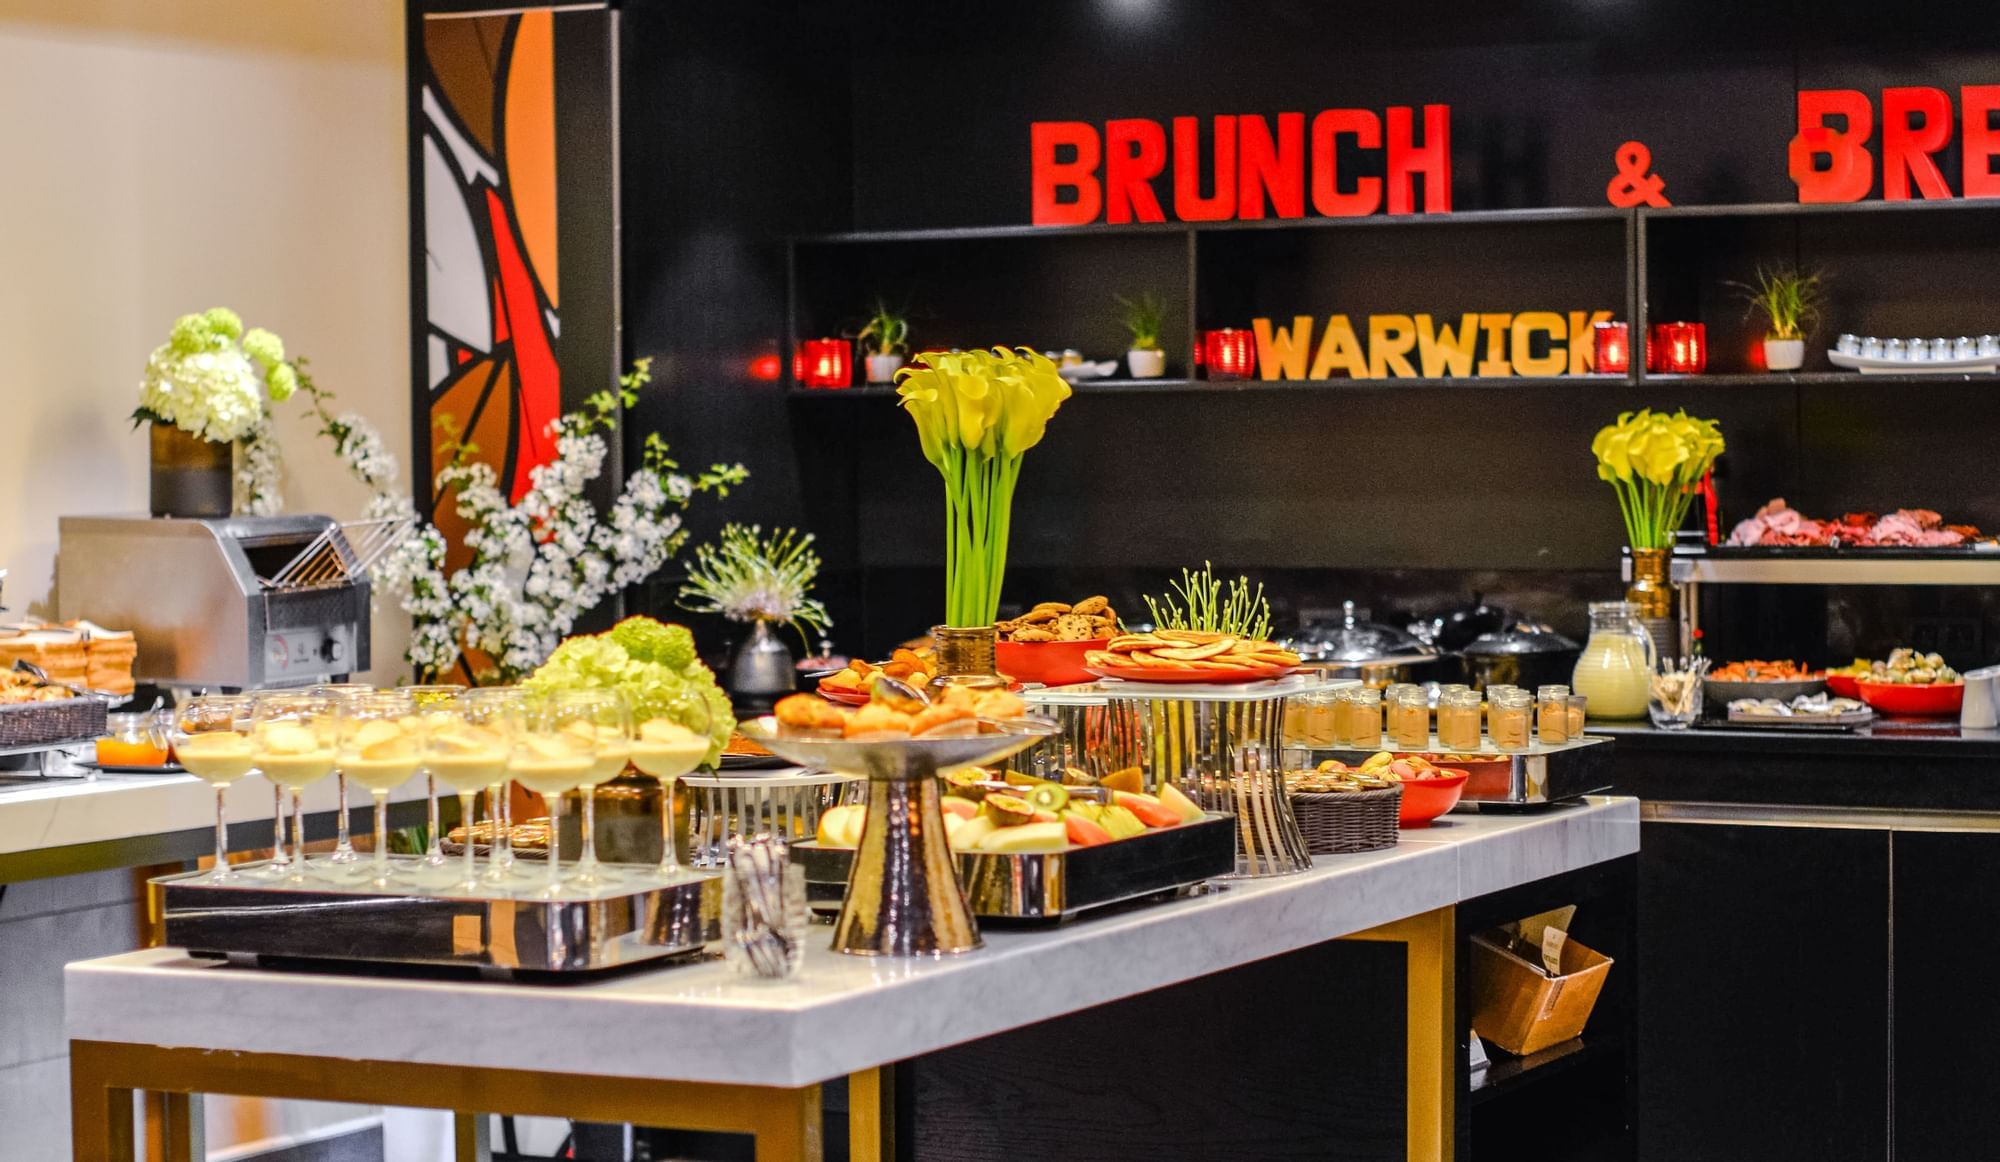 A Brunch buffet display at Warwick Paris Champs Elysées